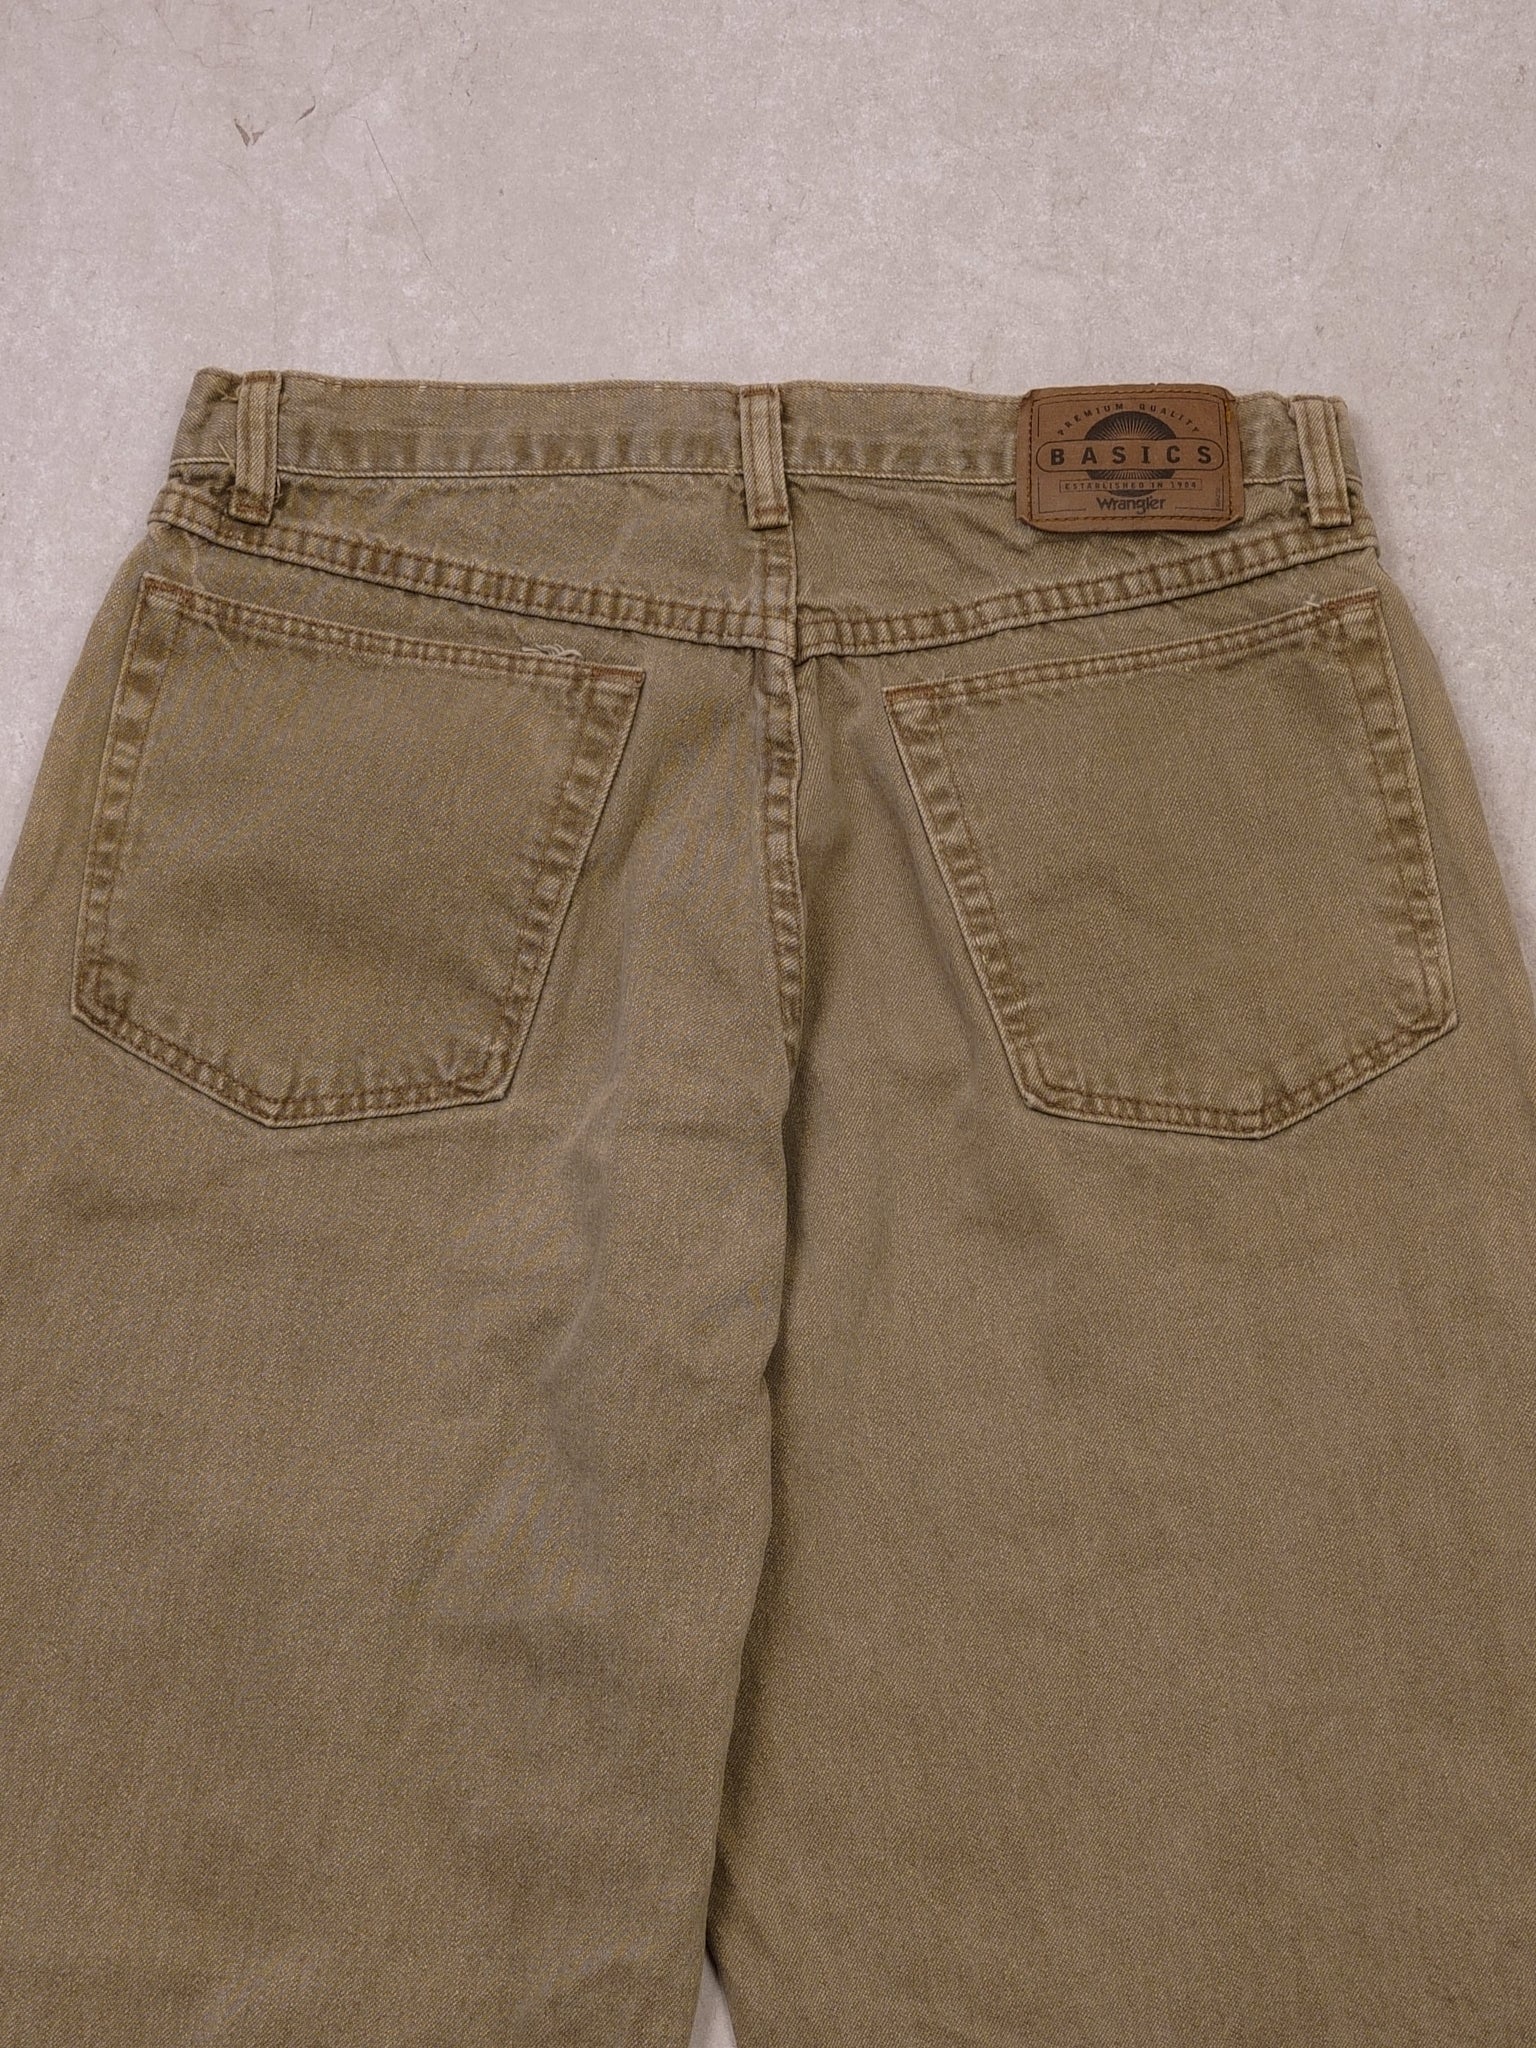 Vintage 90s Sand Wranglers Basics Workwear Pants (30X30)